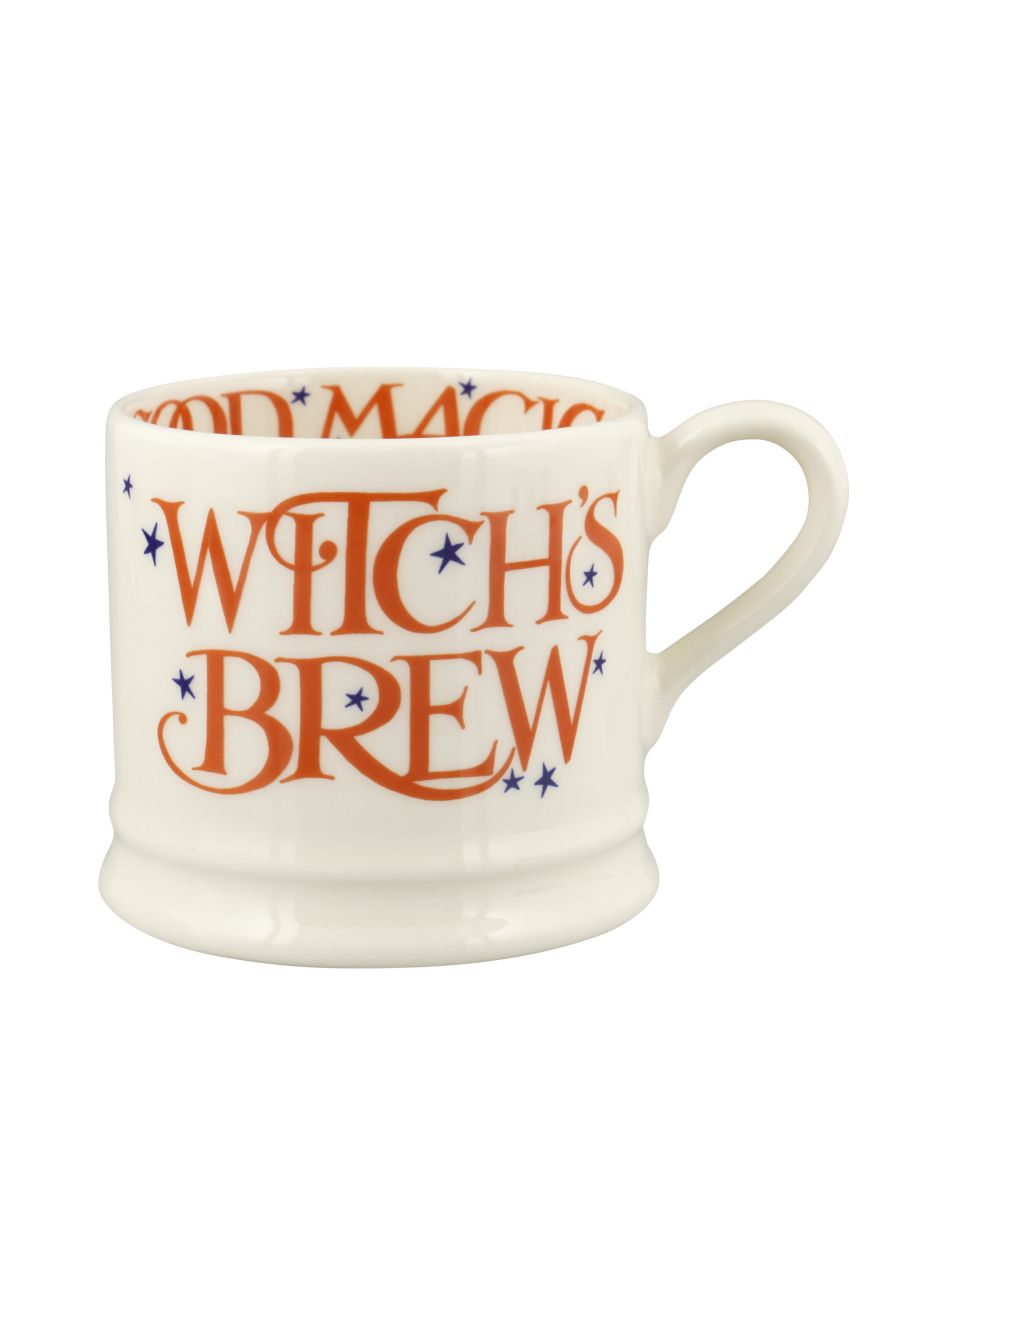 Witch's Brew Small Mug image 2